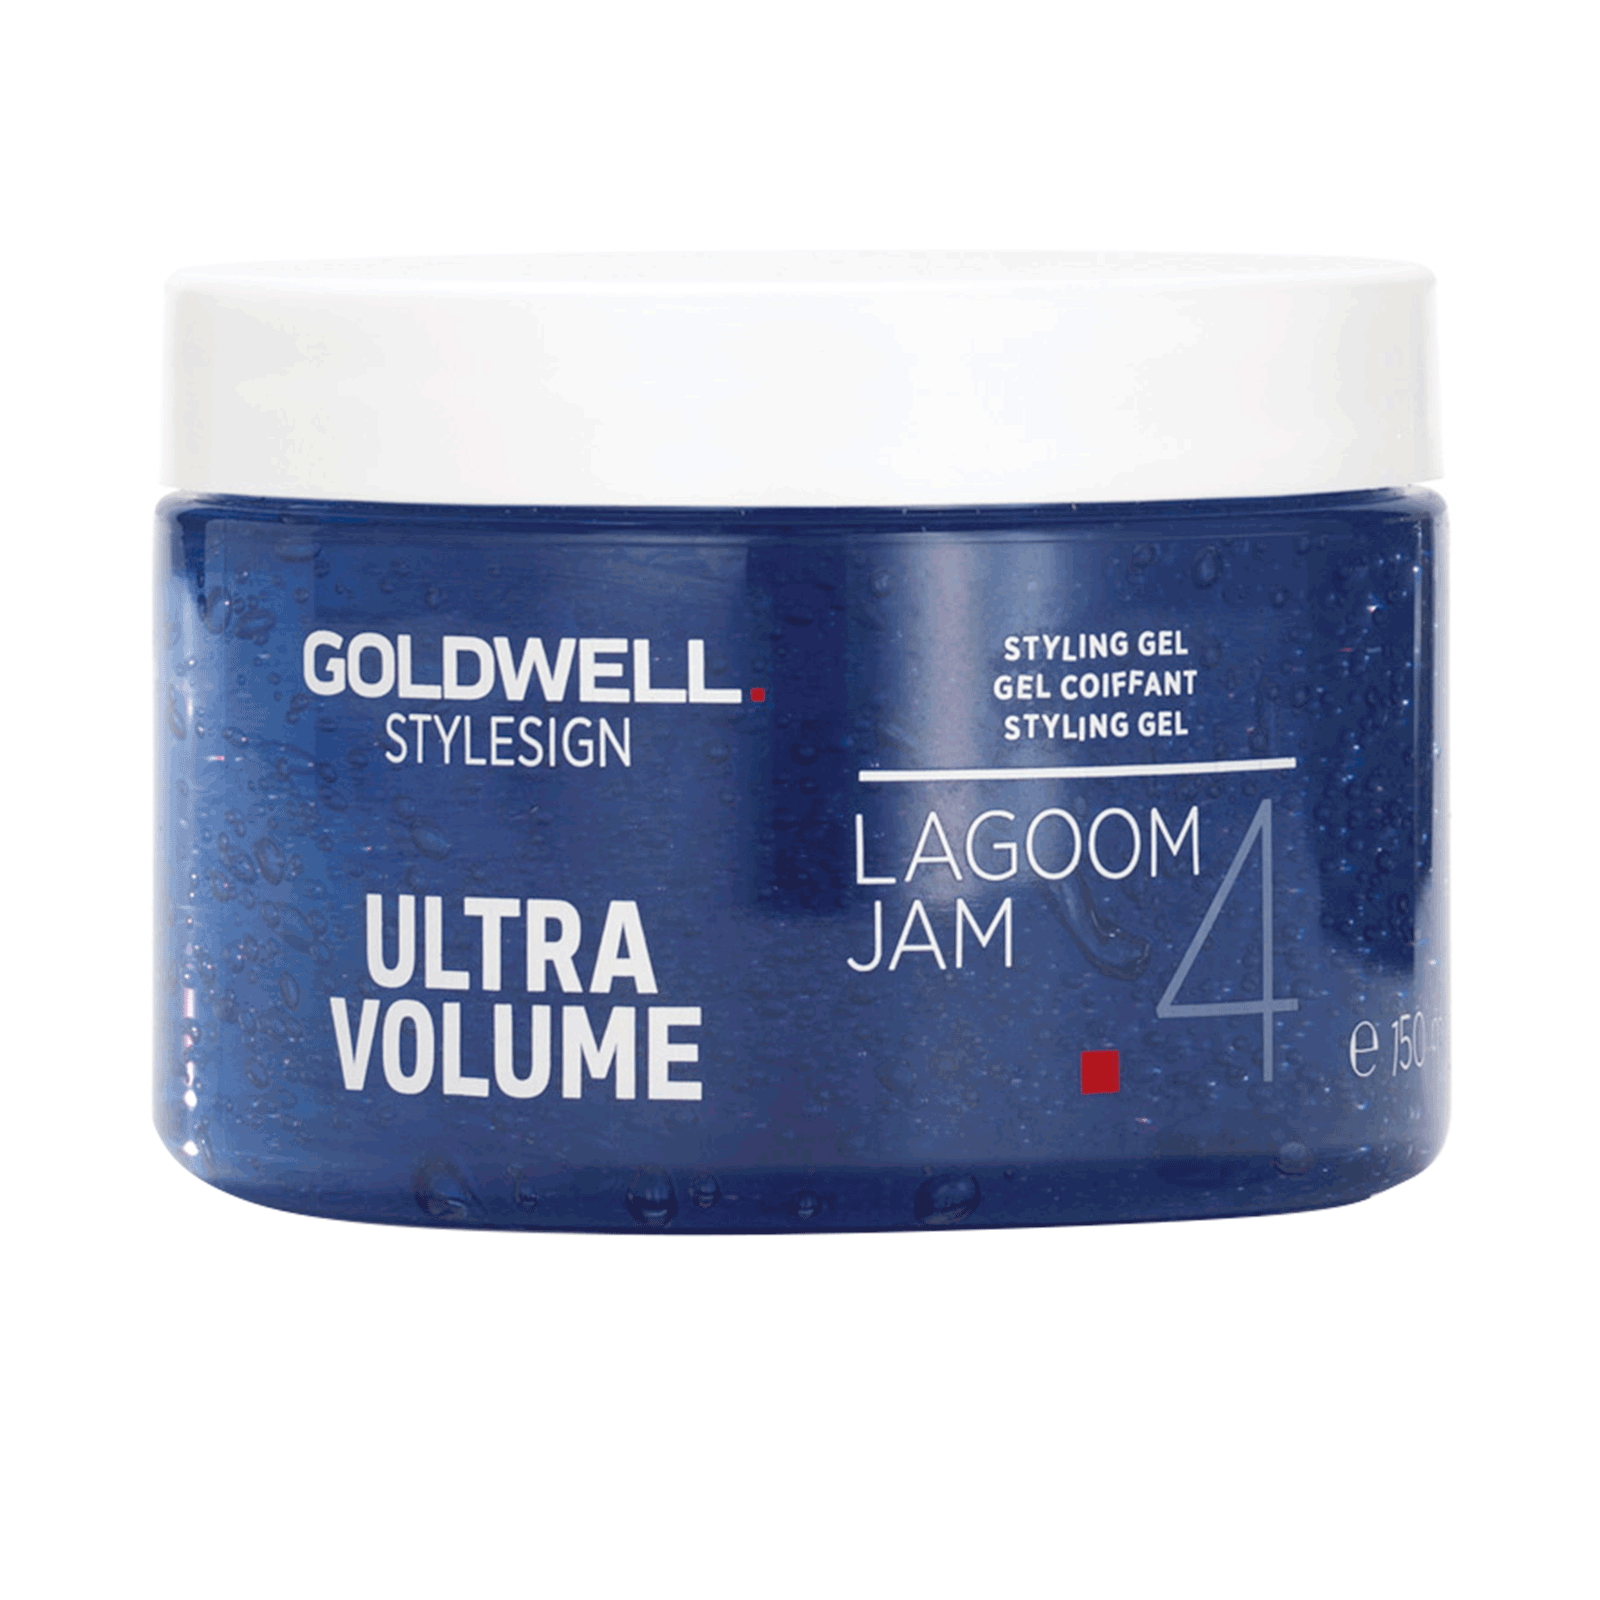 Гель для моделирования объема укладки - Goldwell Stylesign Ultra Volume Lagoom Jam Styling Gel